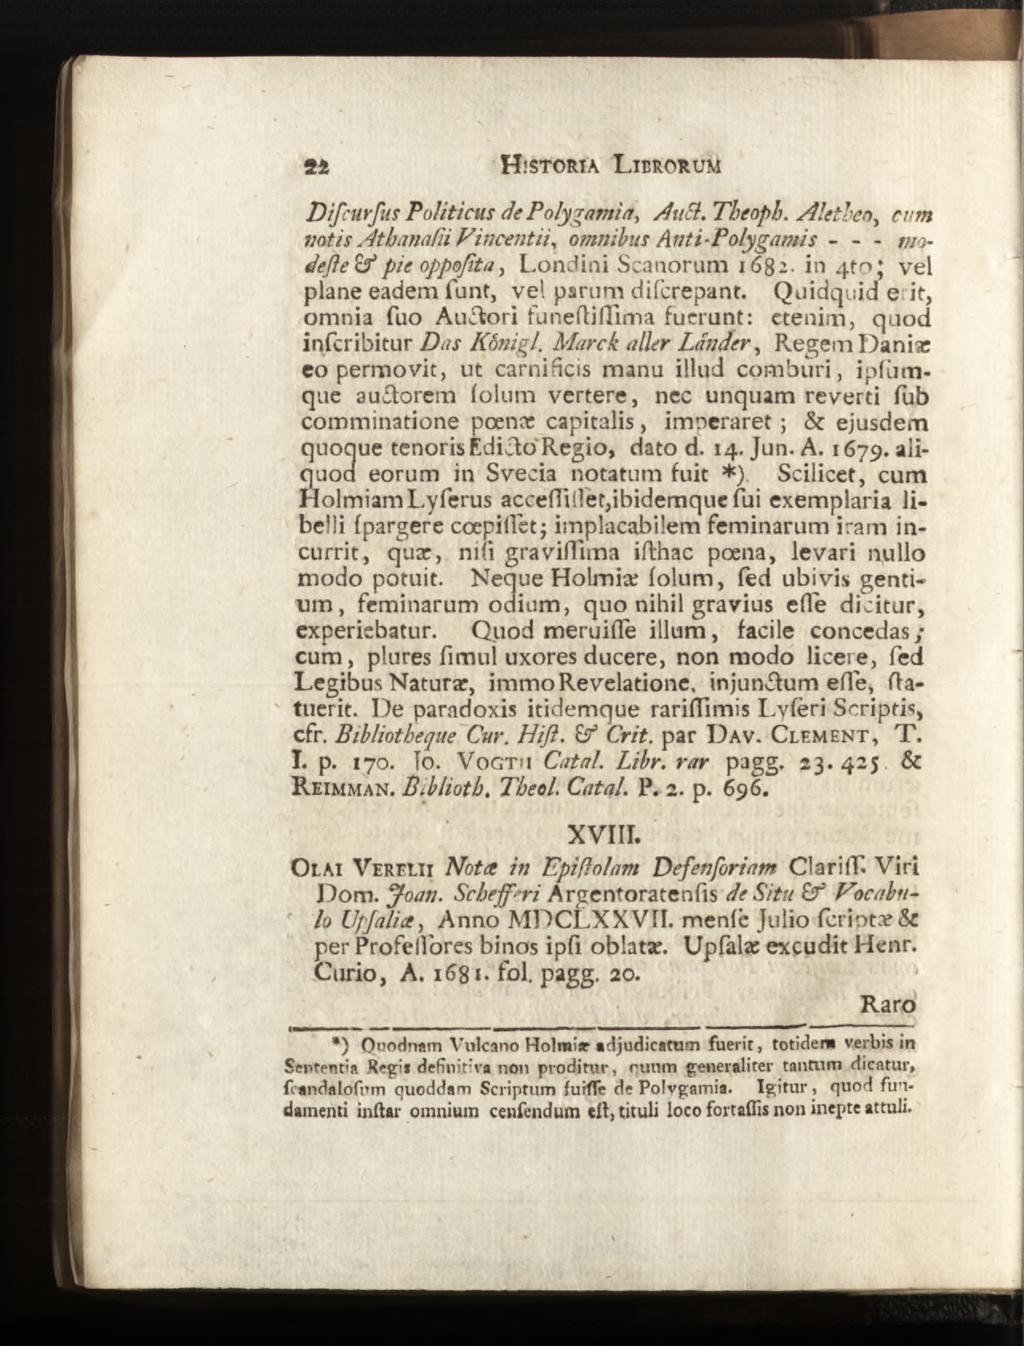 Difcurßis Politicus de Polygaviia, AuSl. Theopb. Aletheo, cum votis Athanafii F incentif omnibus Aut i-poly garni s - - - tnodeße& pie oppofita, Londini Scanorum 1682.